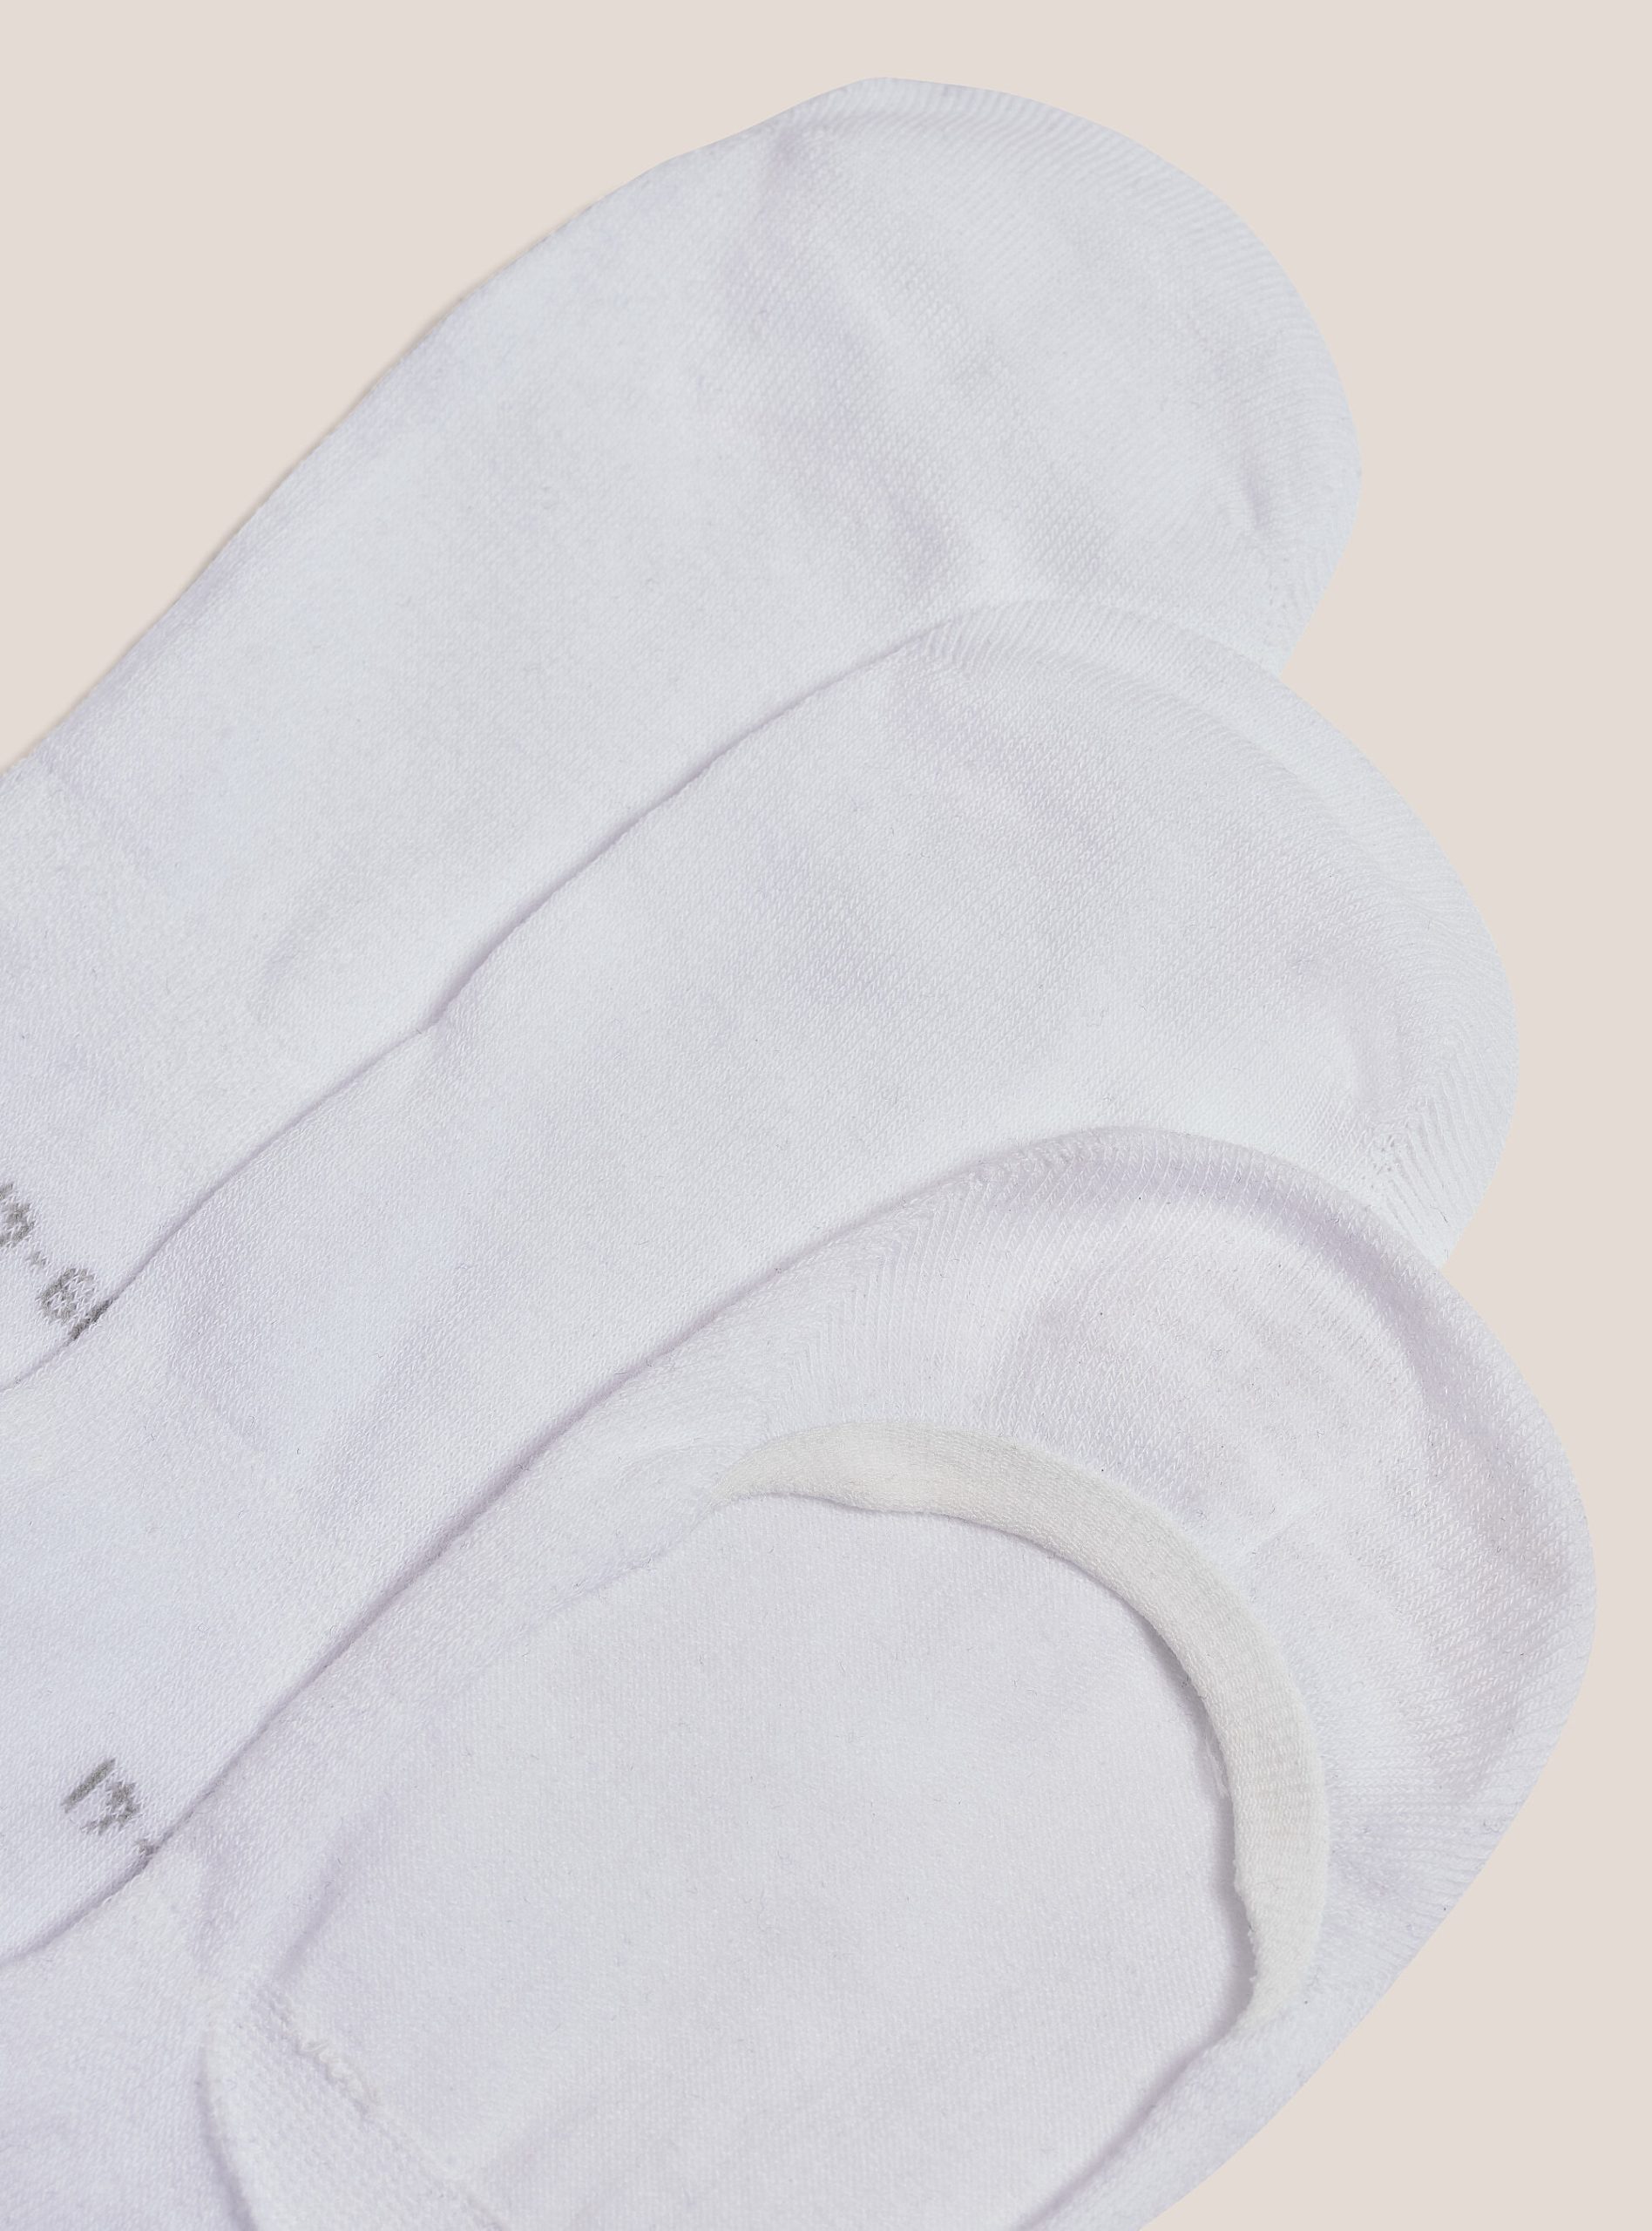 Set 3 Pairs Of Footsies Socks Verbraucher Alcott Socken Frauen C099 White – 2